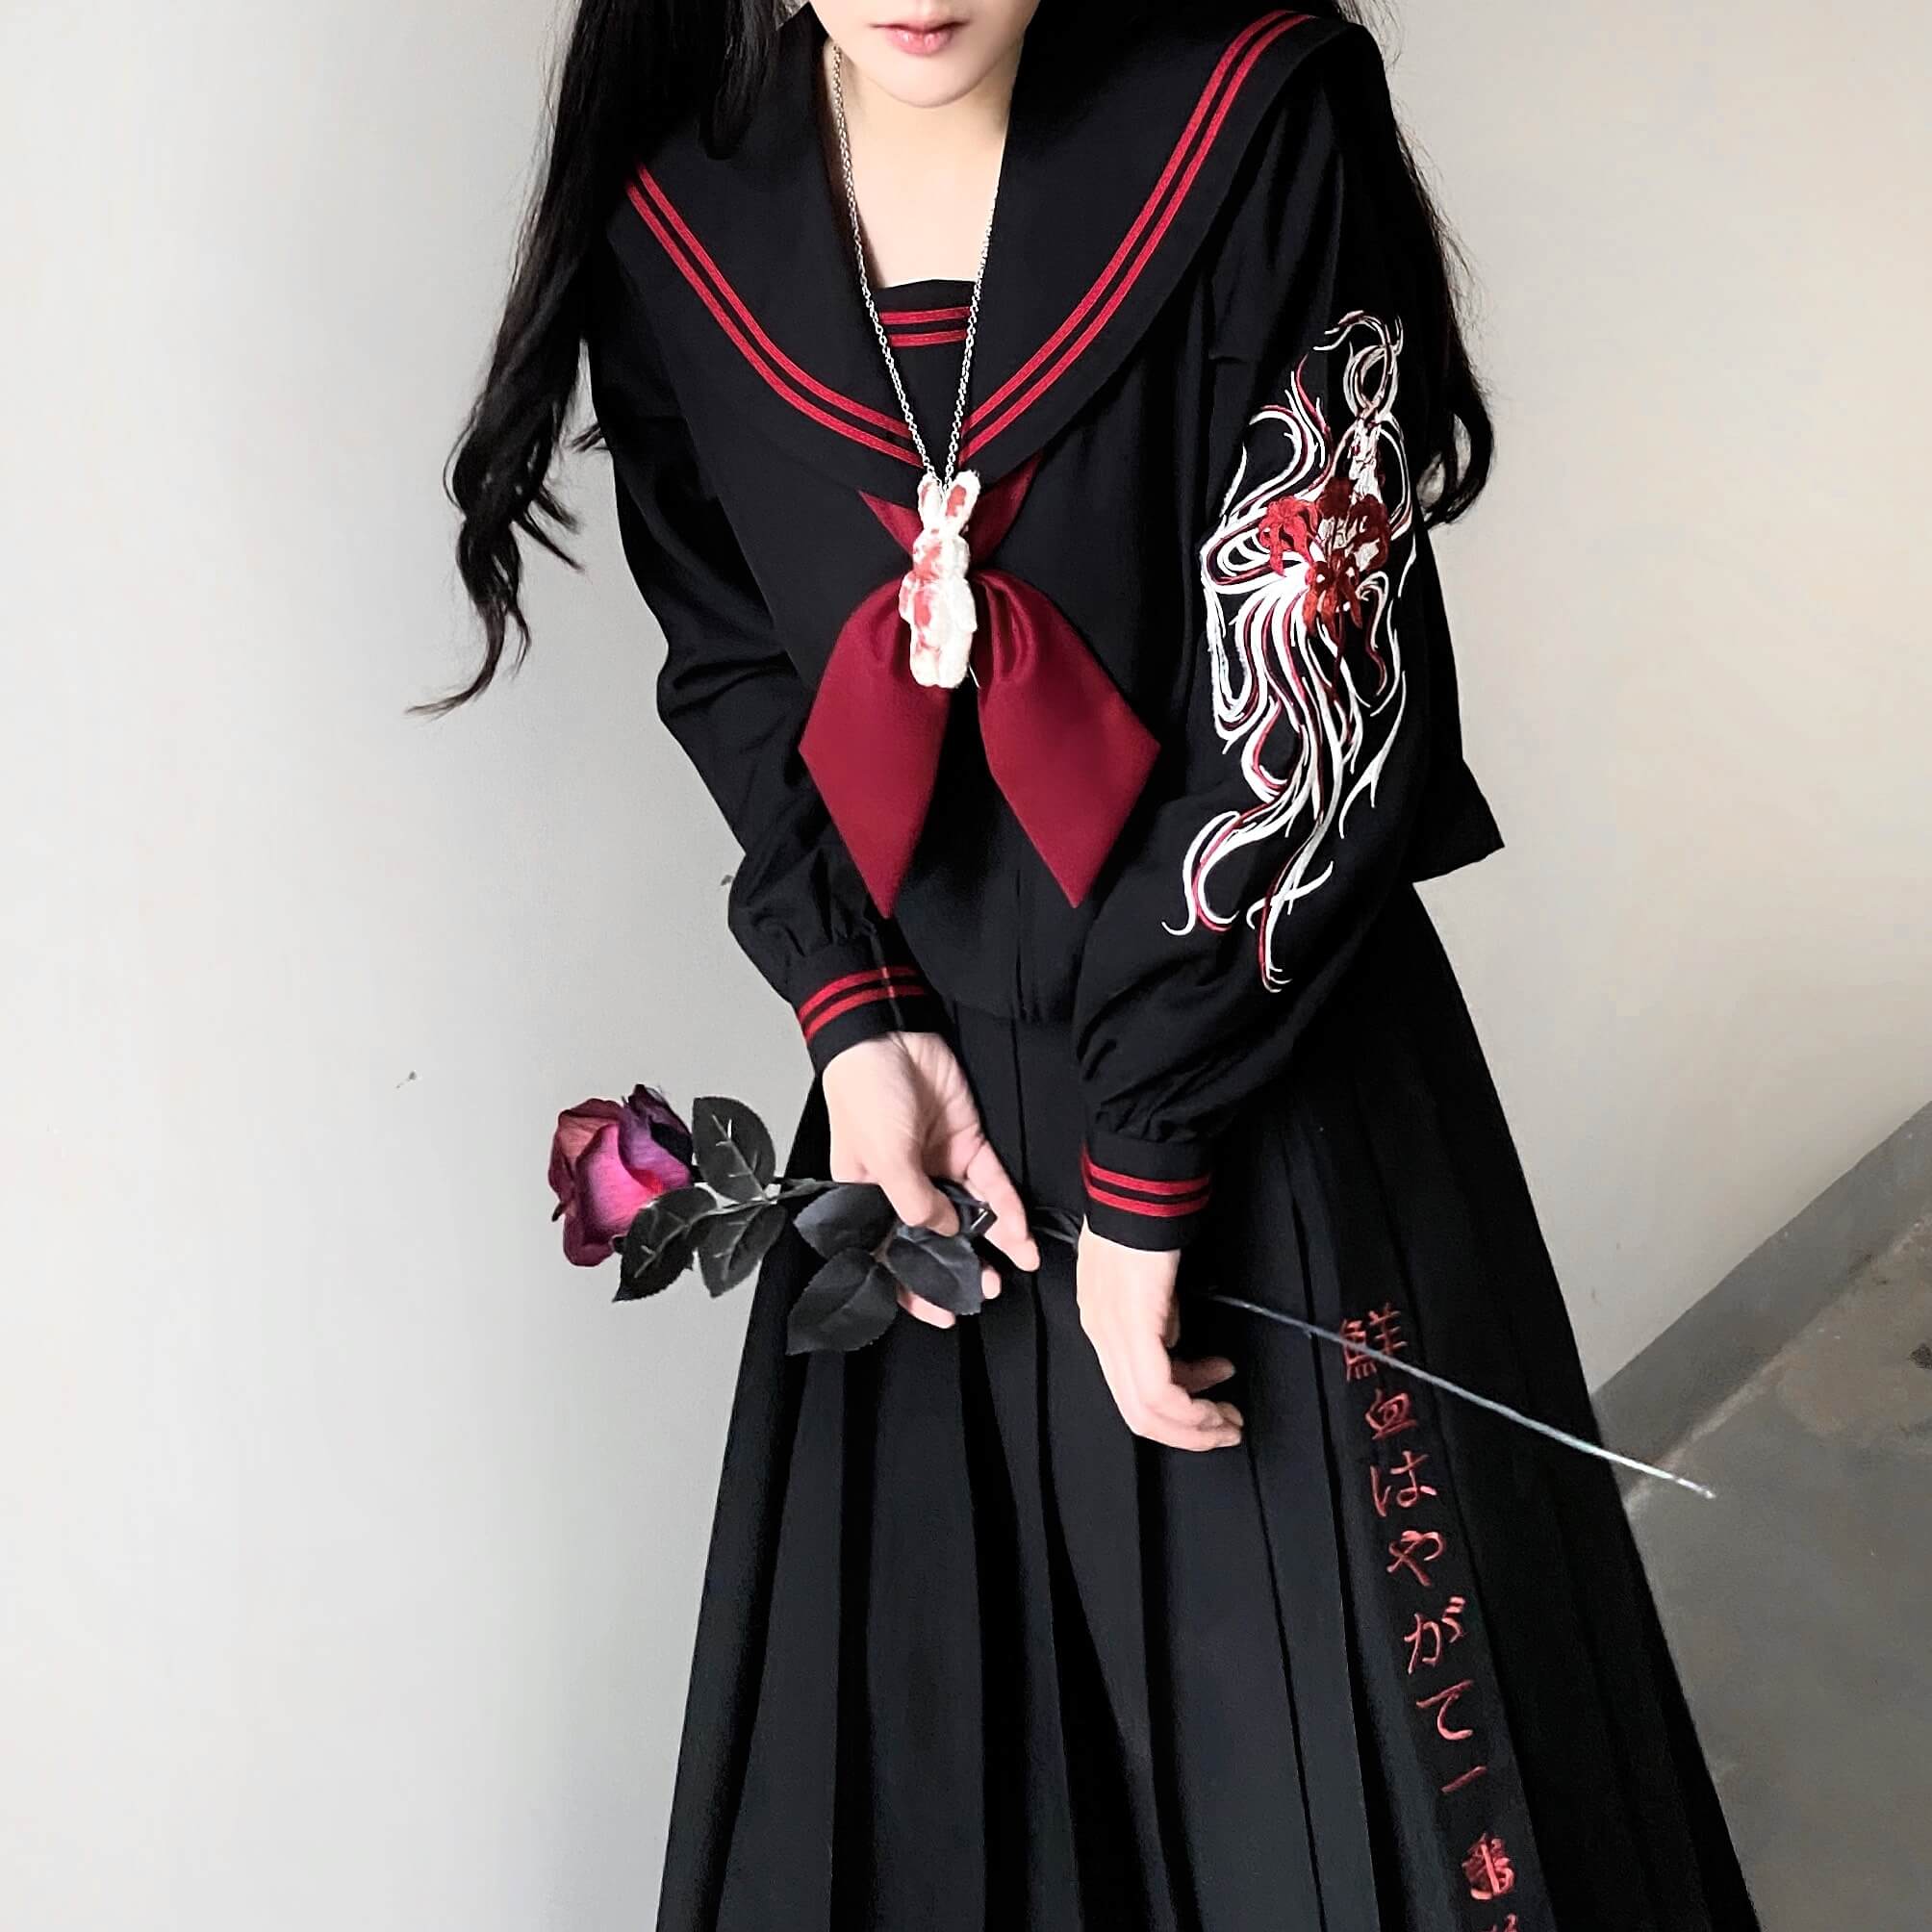 cutiekill-bloody-black-jk-dark-embroidery-uniform-set-jk0025